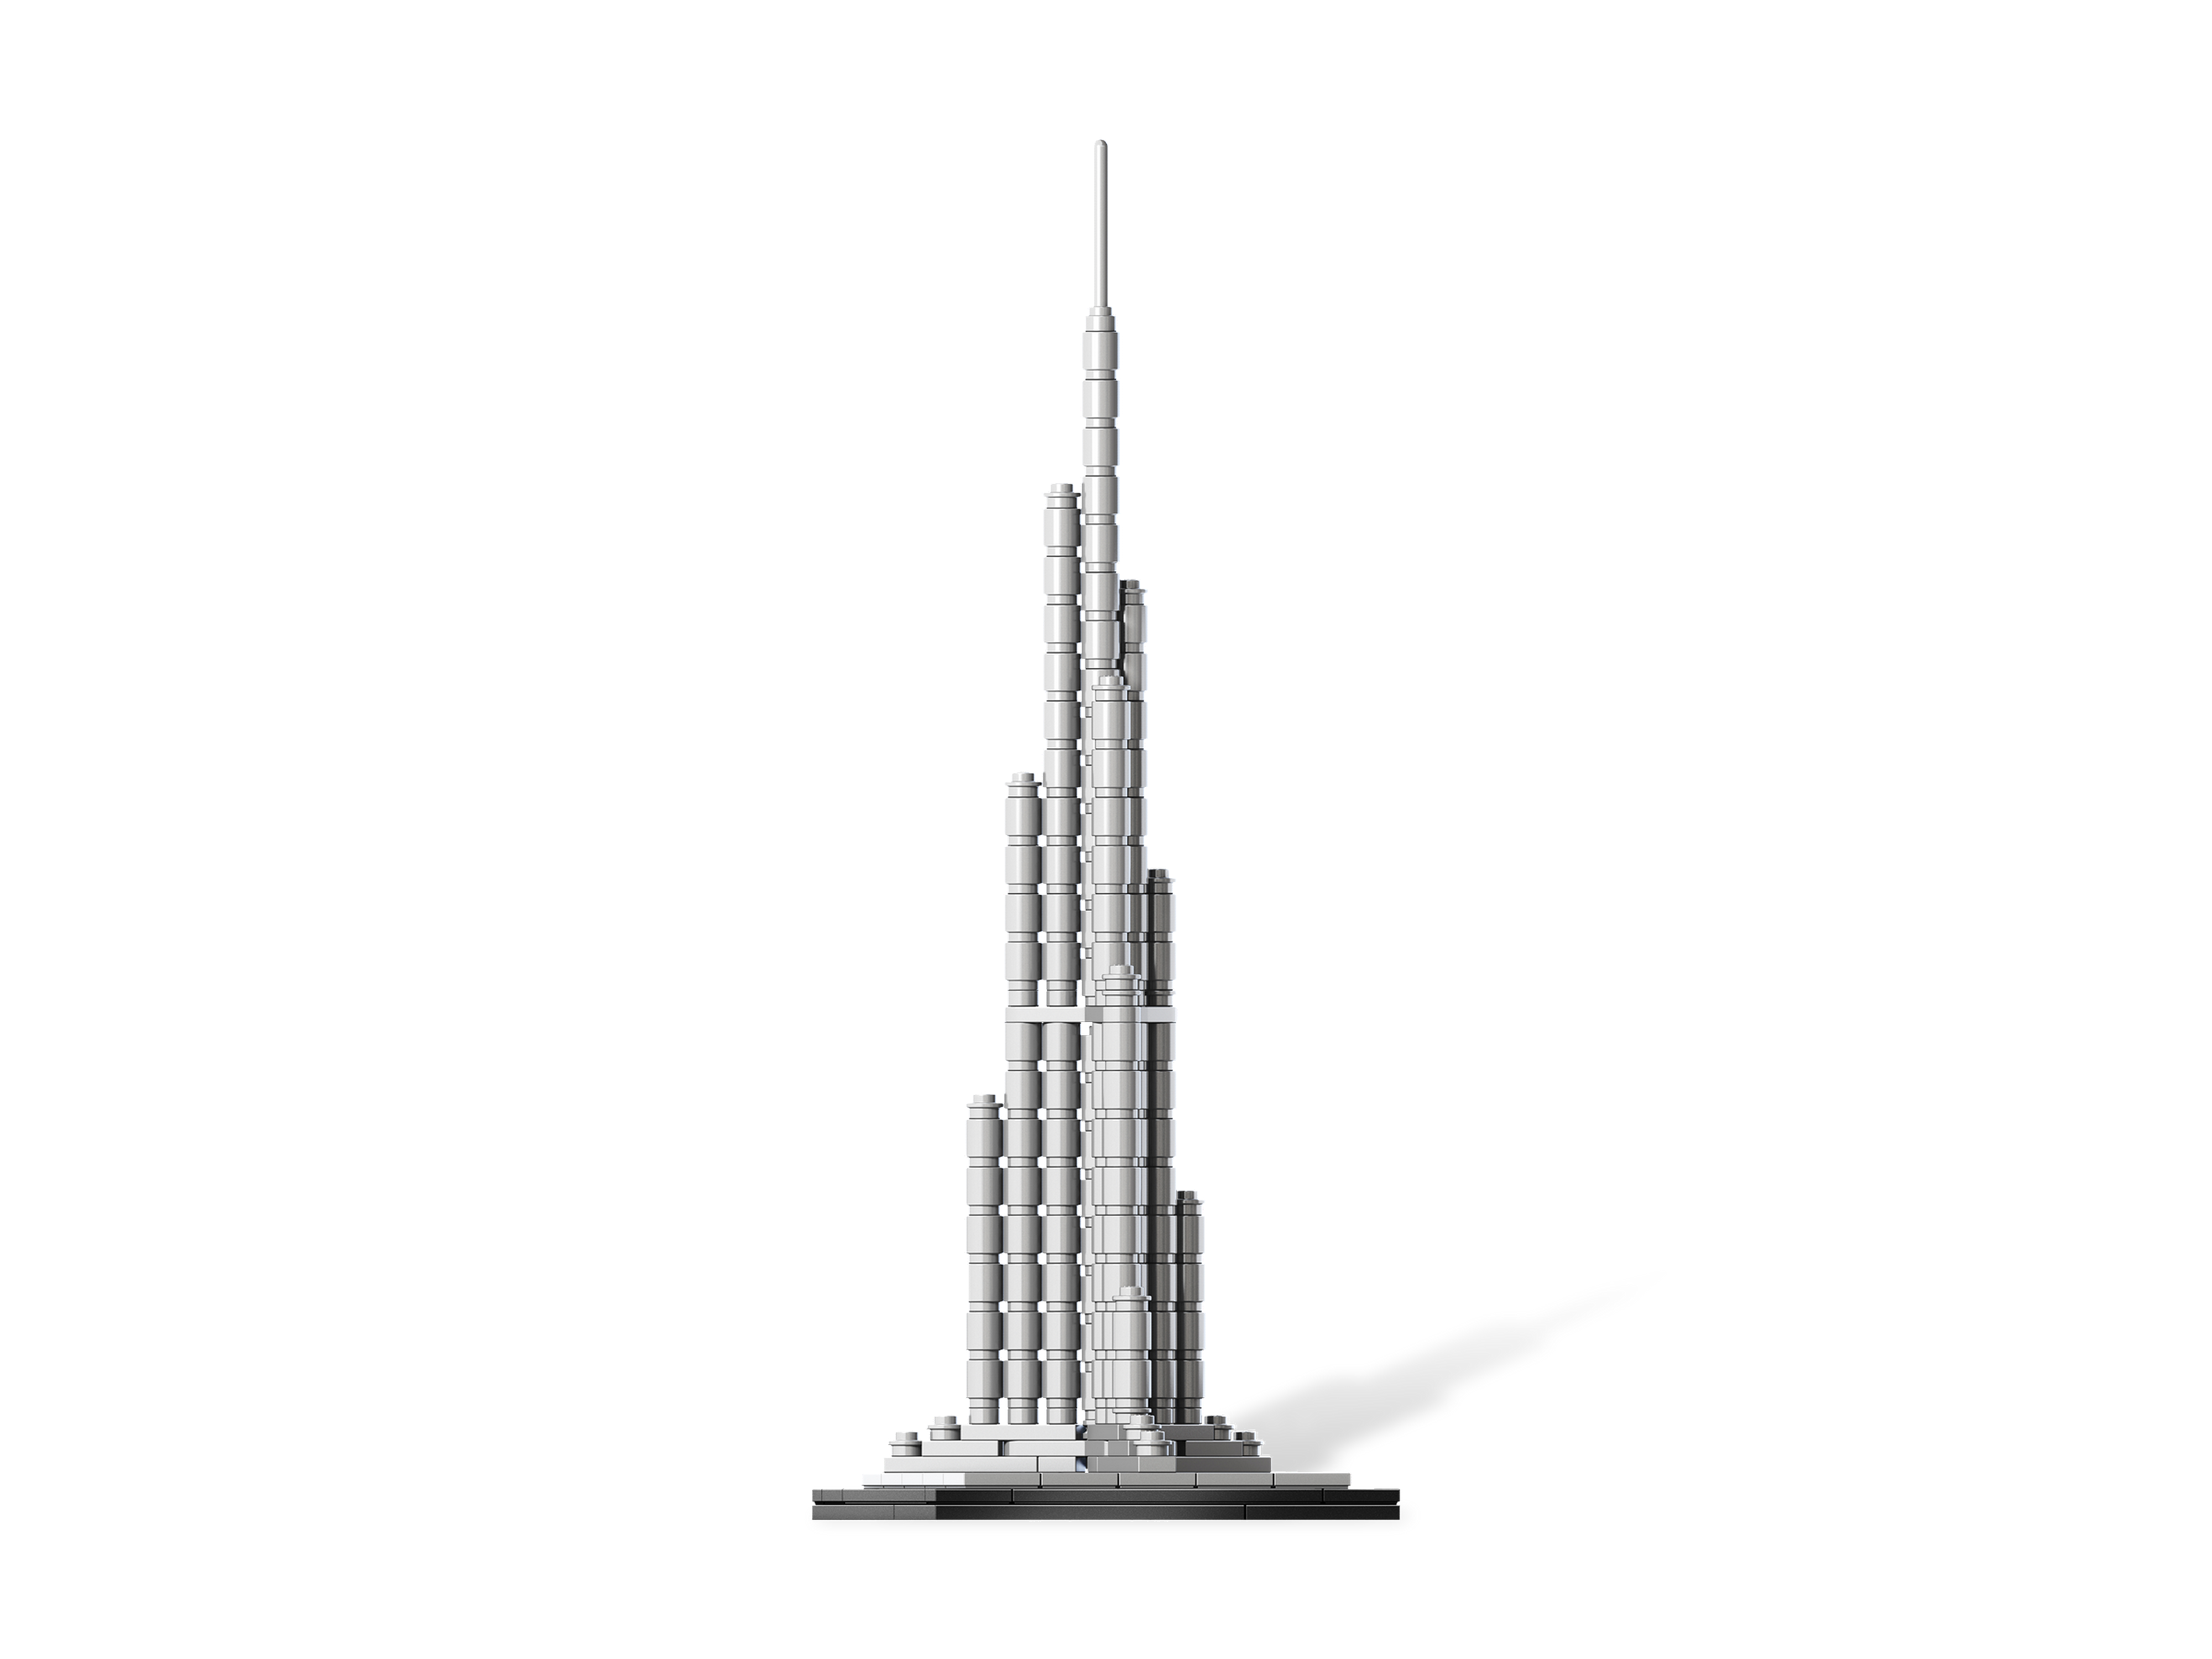 Burj Khalifa Image PNG Image